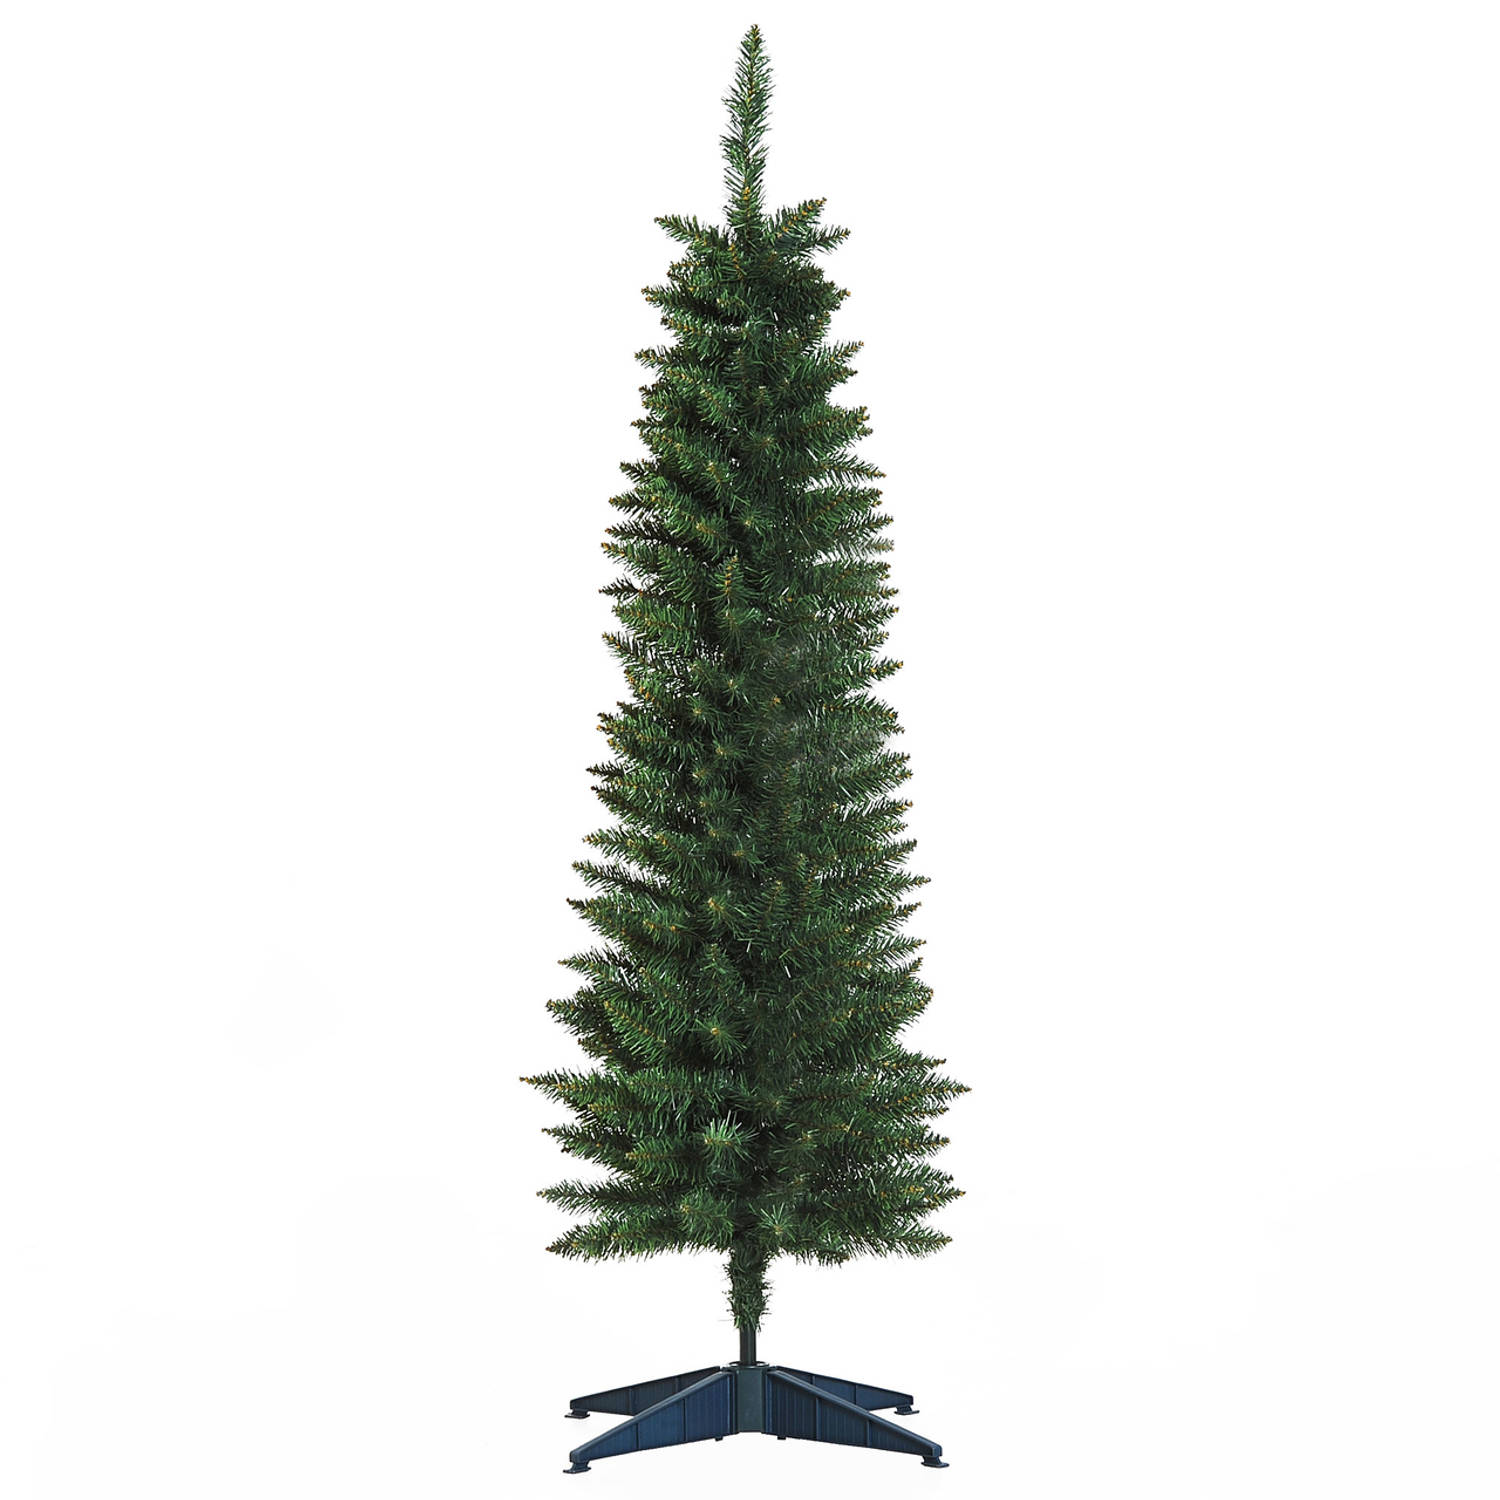 artikel lijst kiezen ChristmasGoodz - Kunstkerstboom - Smalle Kunstkerstboom - Smalle kerstboom  - 150 cm | Blokker